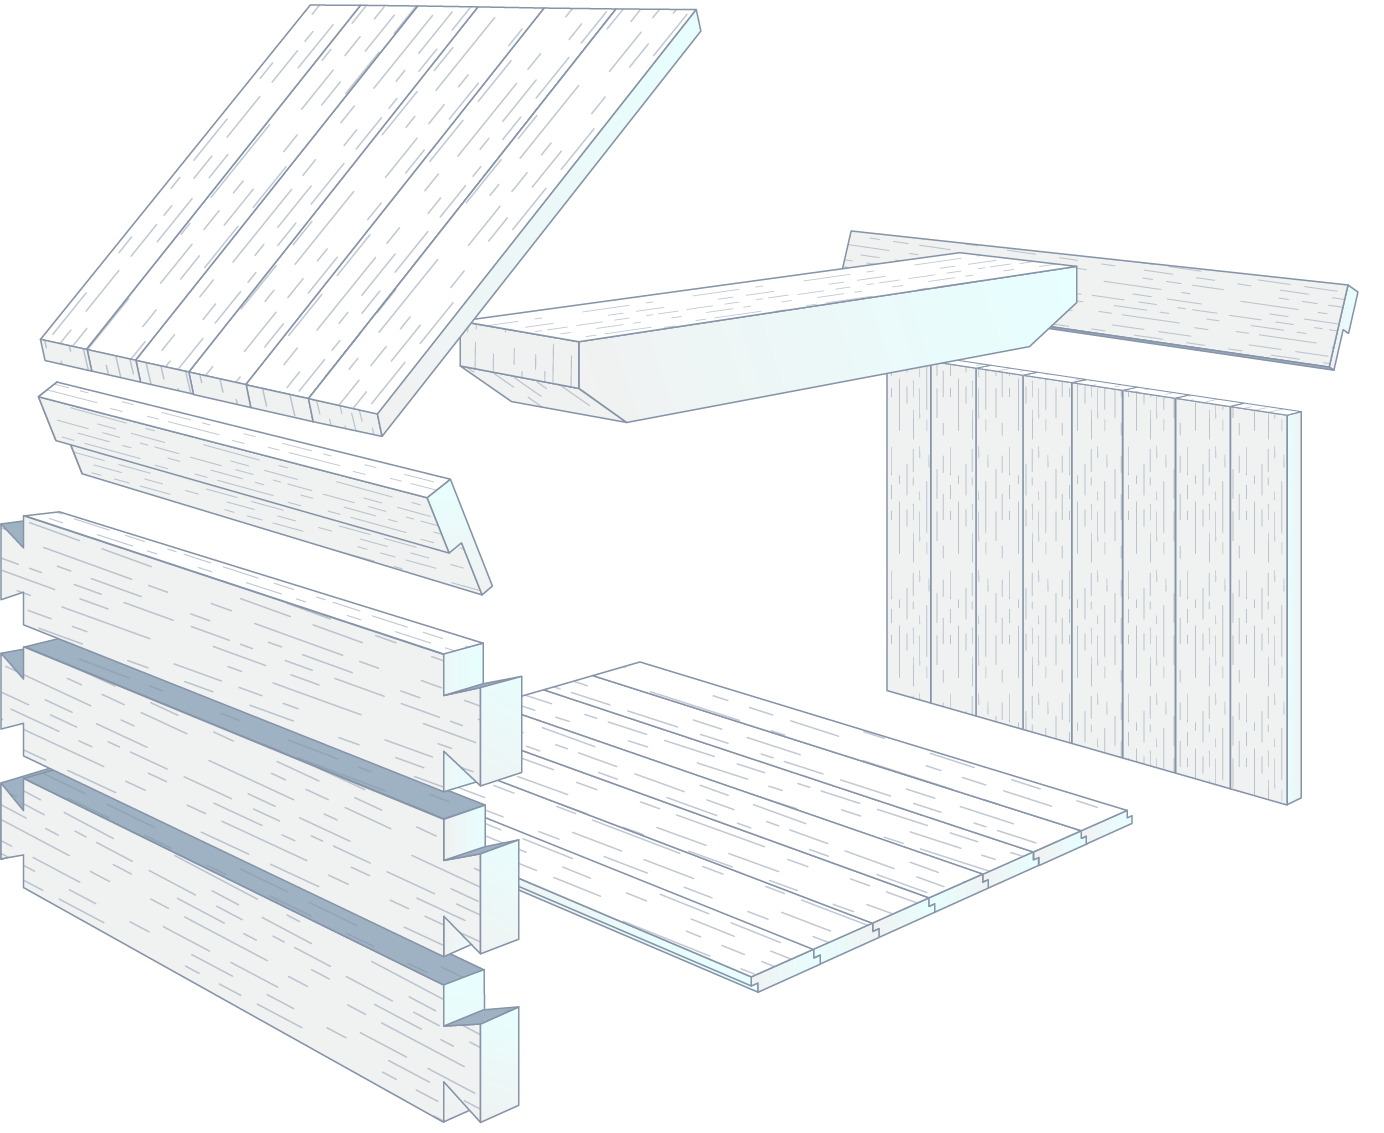 Timbers, paneling, trim, flooring, fascia, and siding